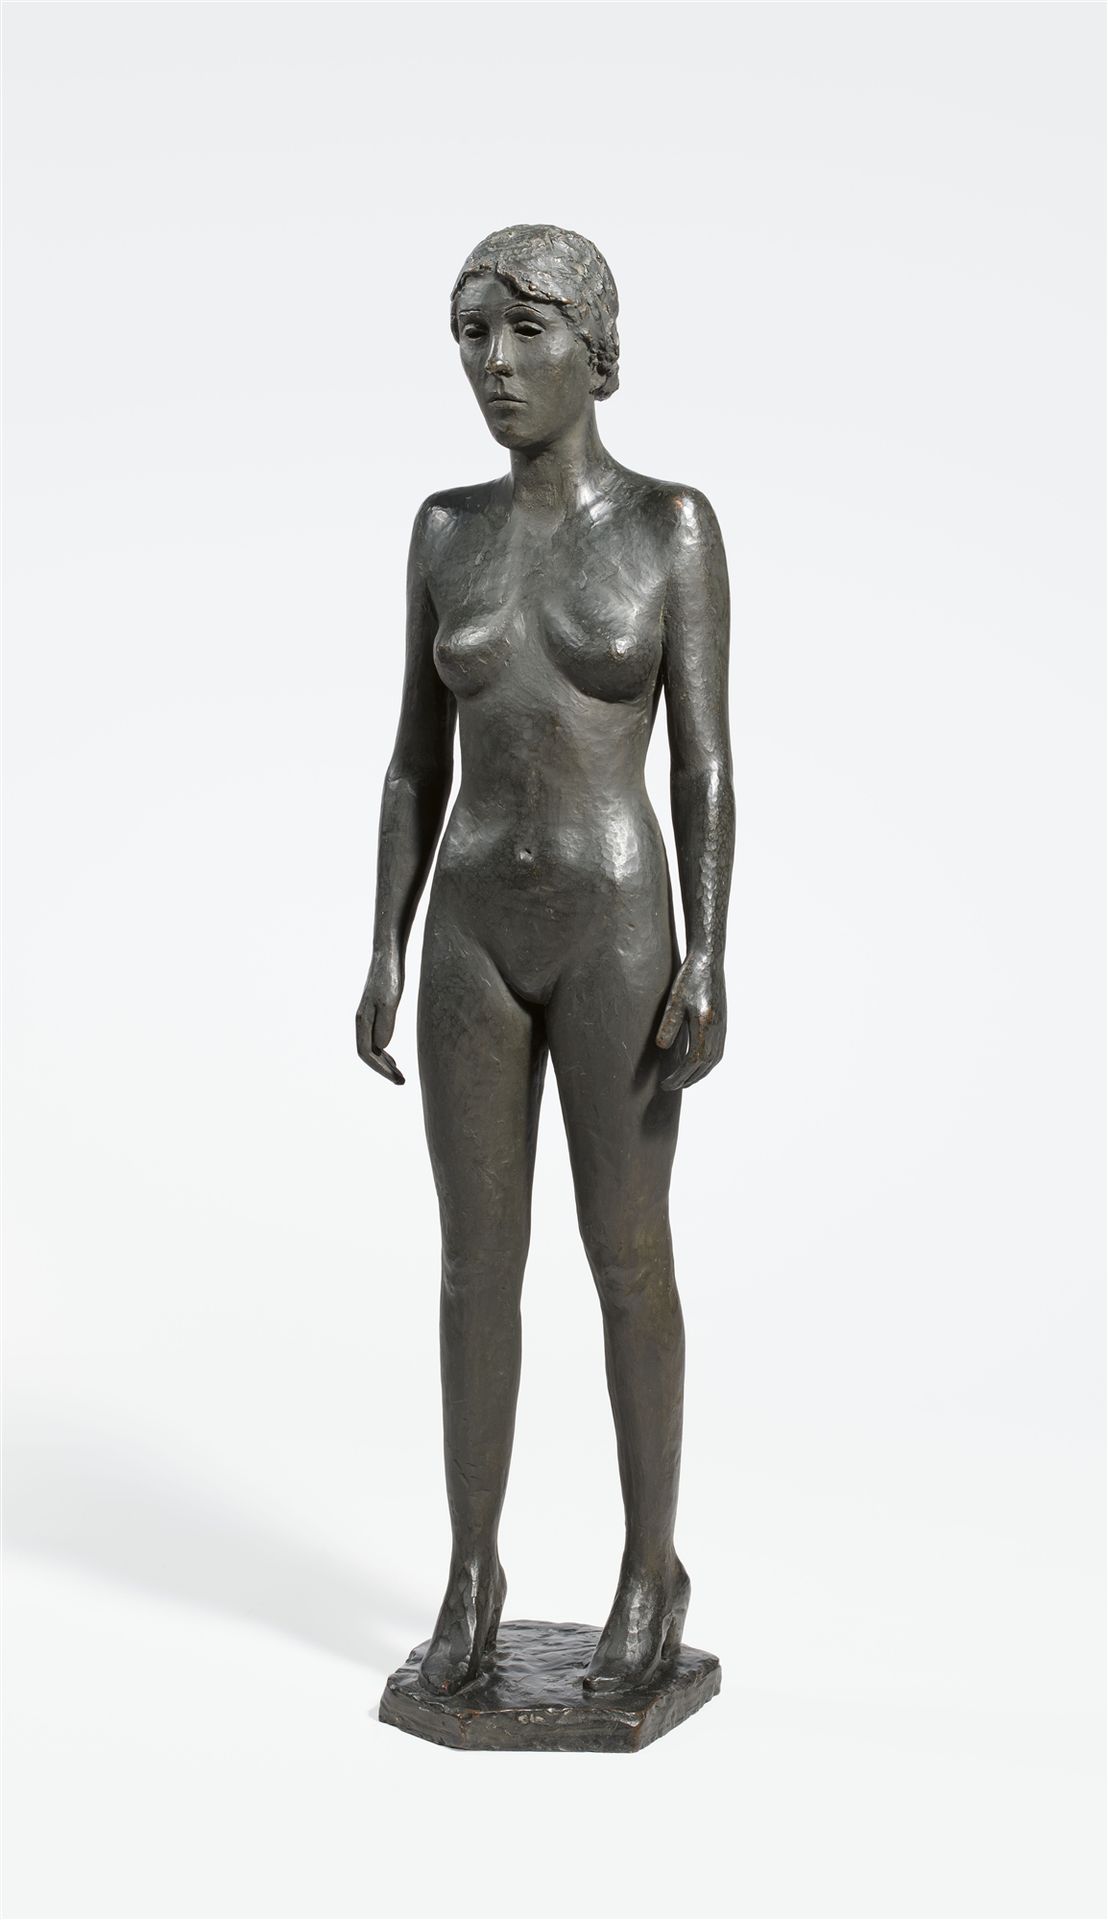 Ernesto de Fiori Ernesto de Fiori

Américaine
1924

En bronze. Hauteur 118,5 cm.&hellip;